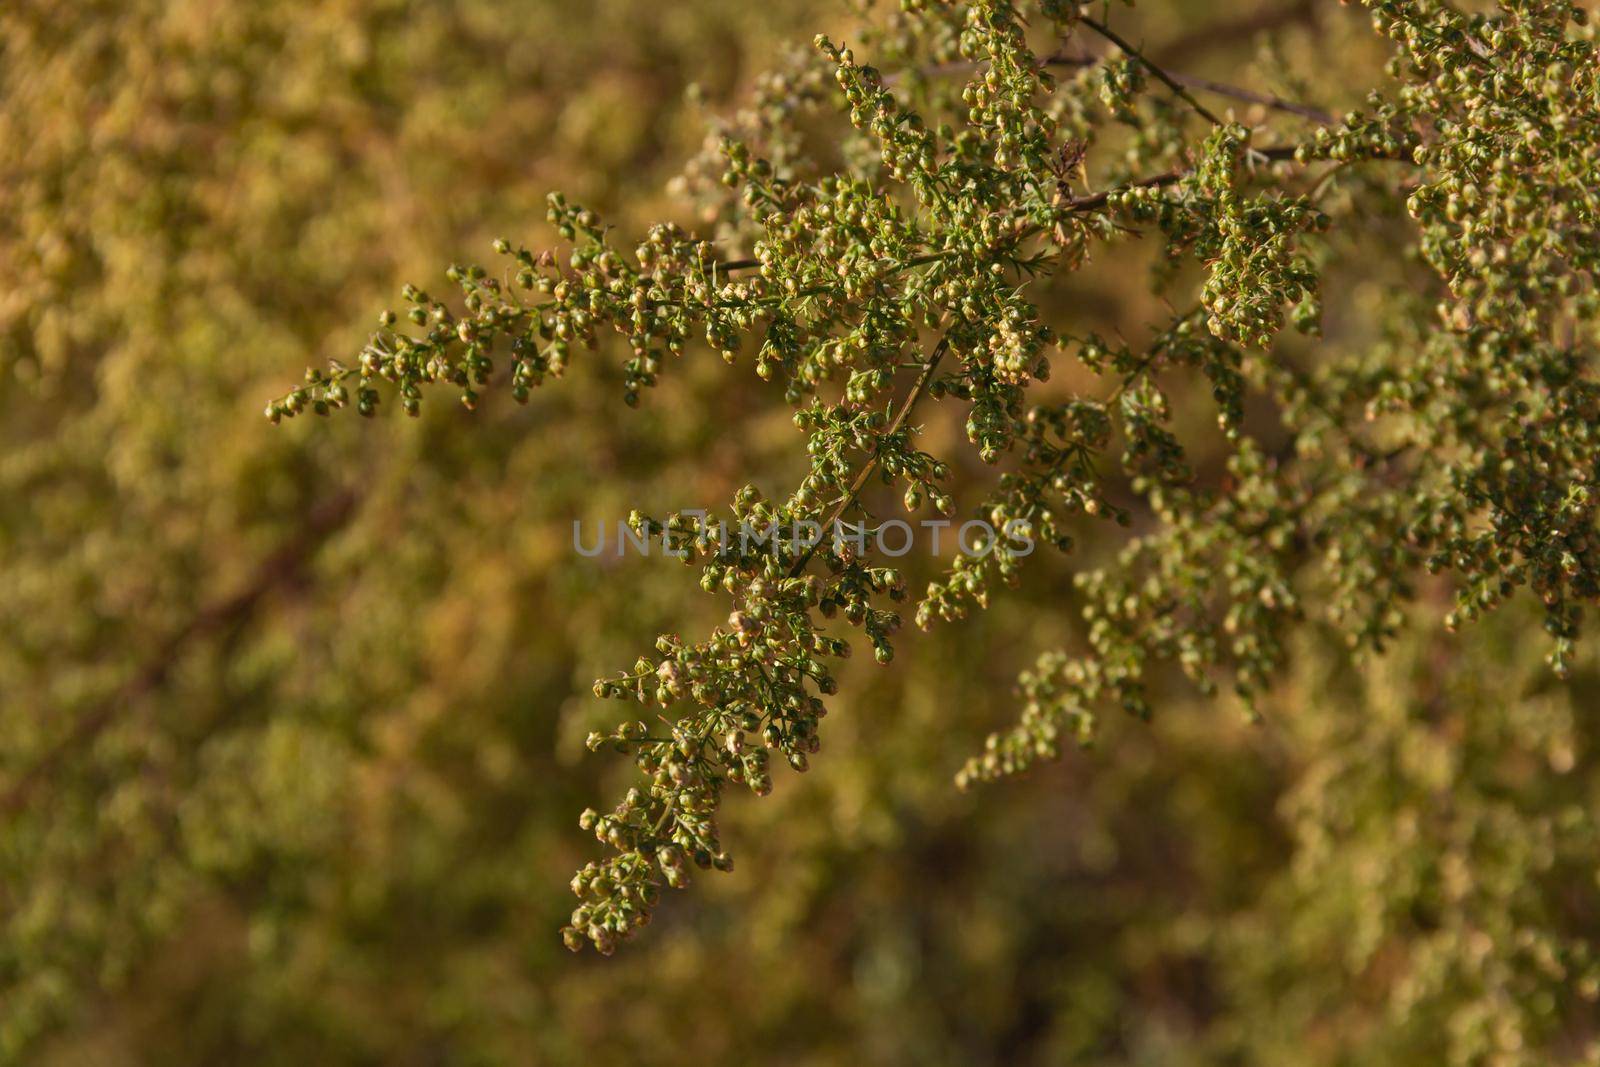 wild artemisia annua plants in the mountains, cordoba province, argentina